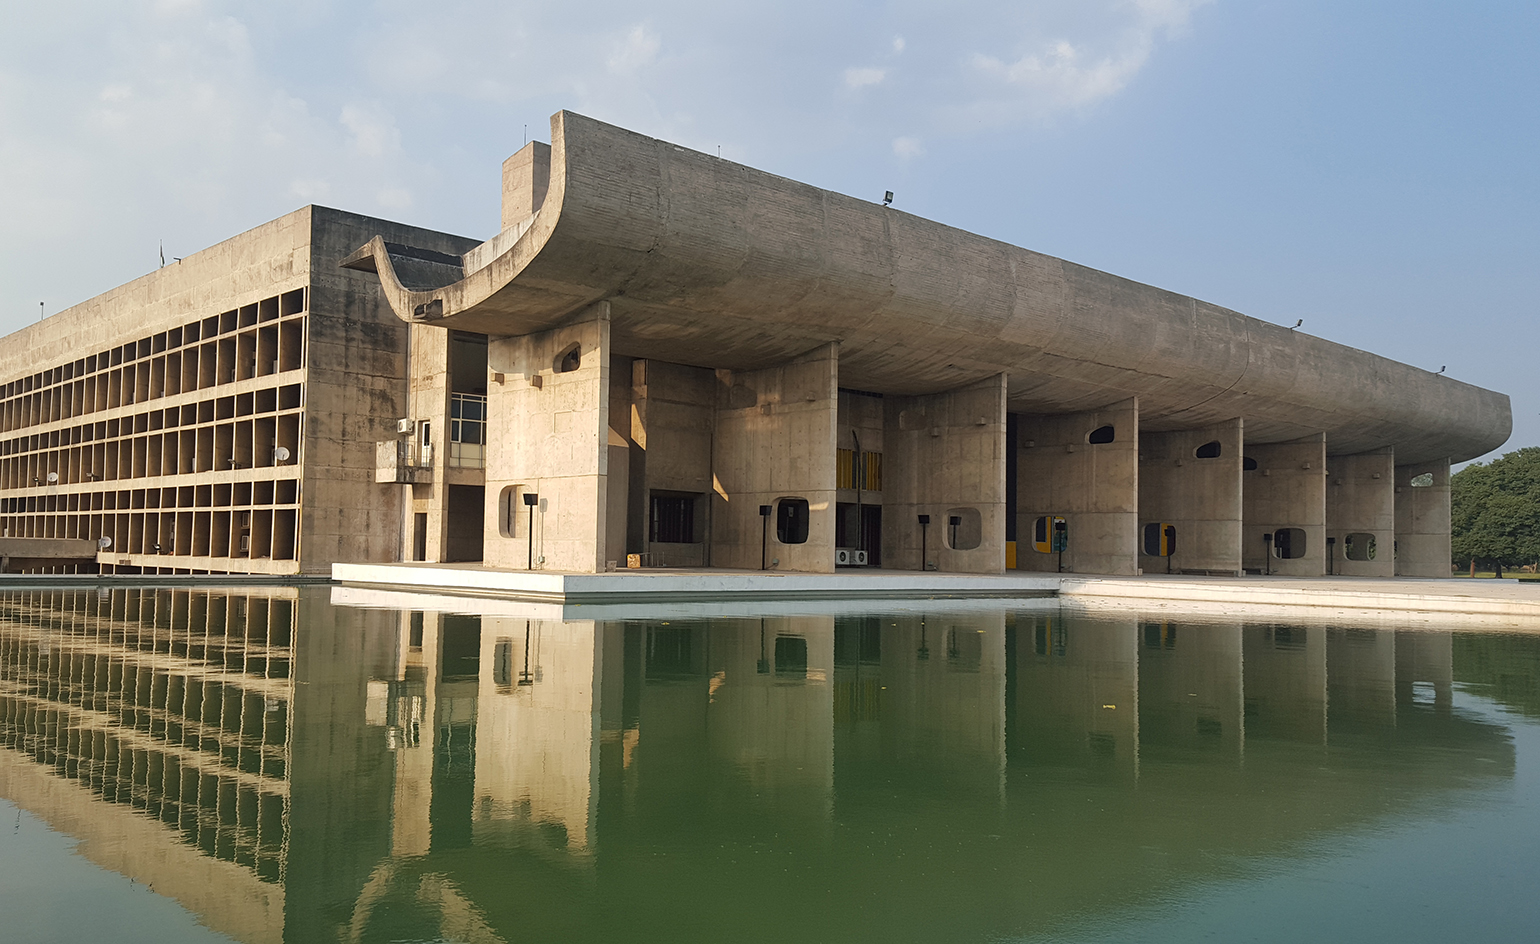 Le Corbusier's Chandigarh gains UNESCO World Heritage status | Wallpaper